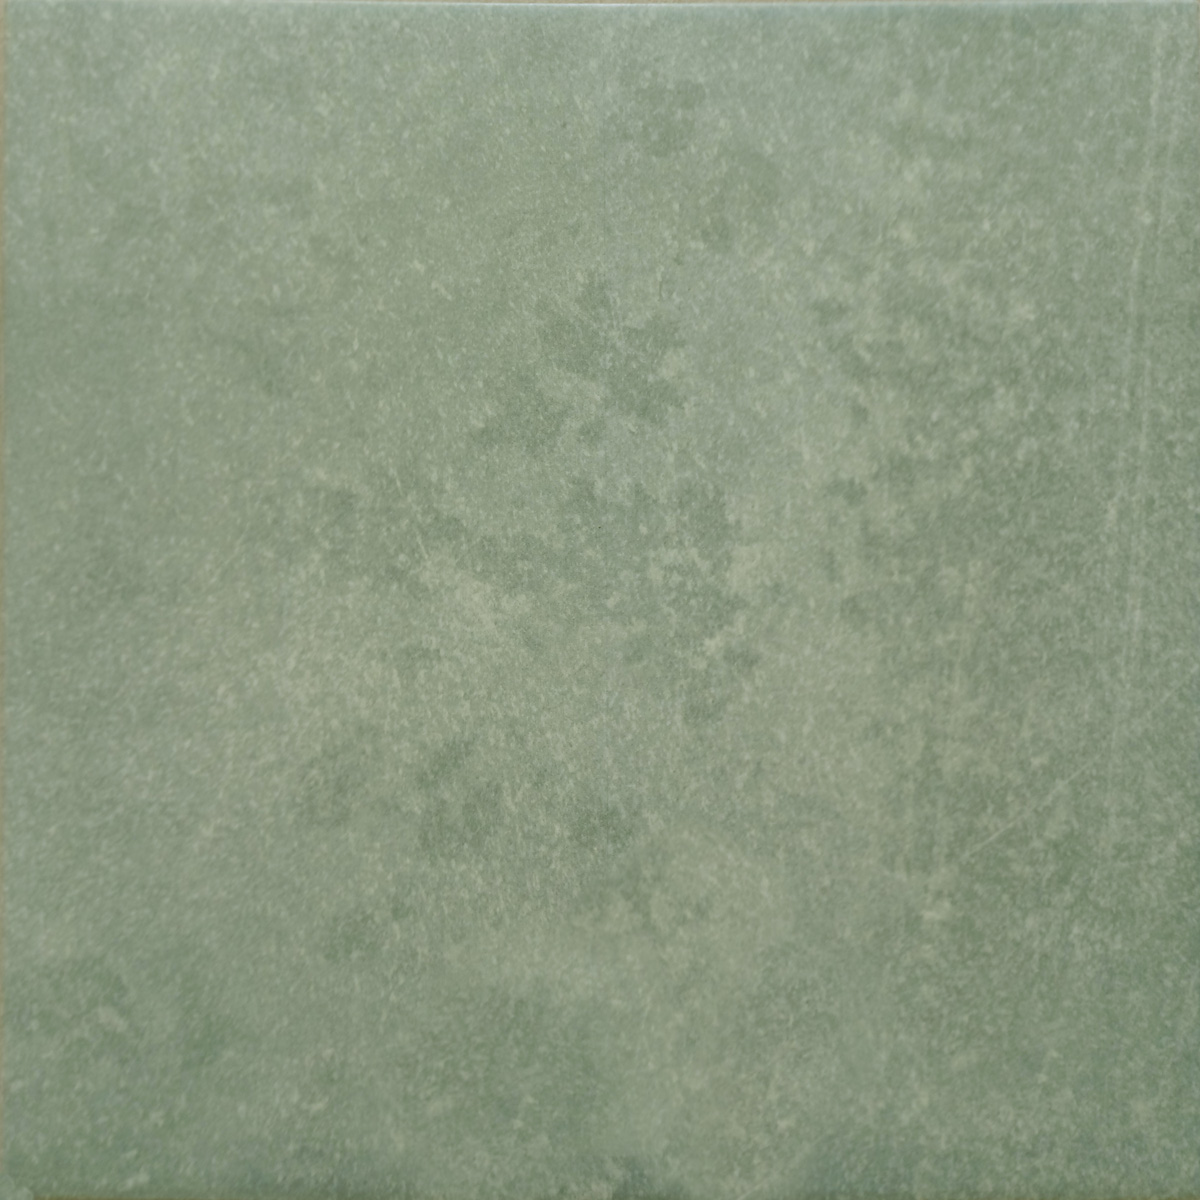 Jabo Tegelsample:  Beton Cire Bercy Salvia vloertegel groen 22x22cm